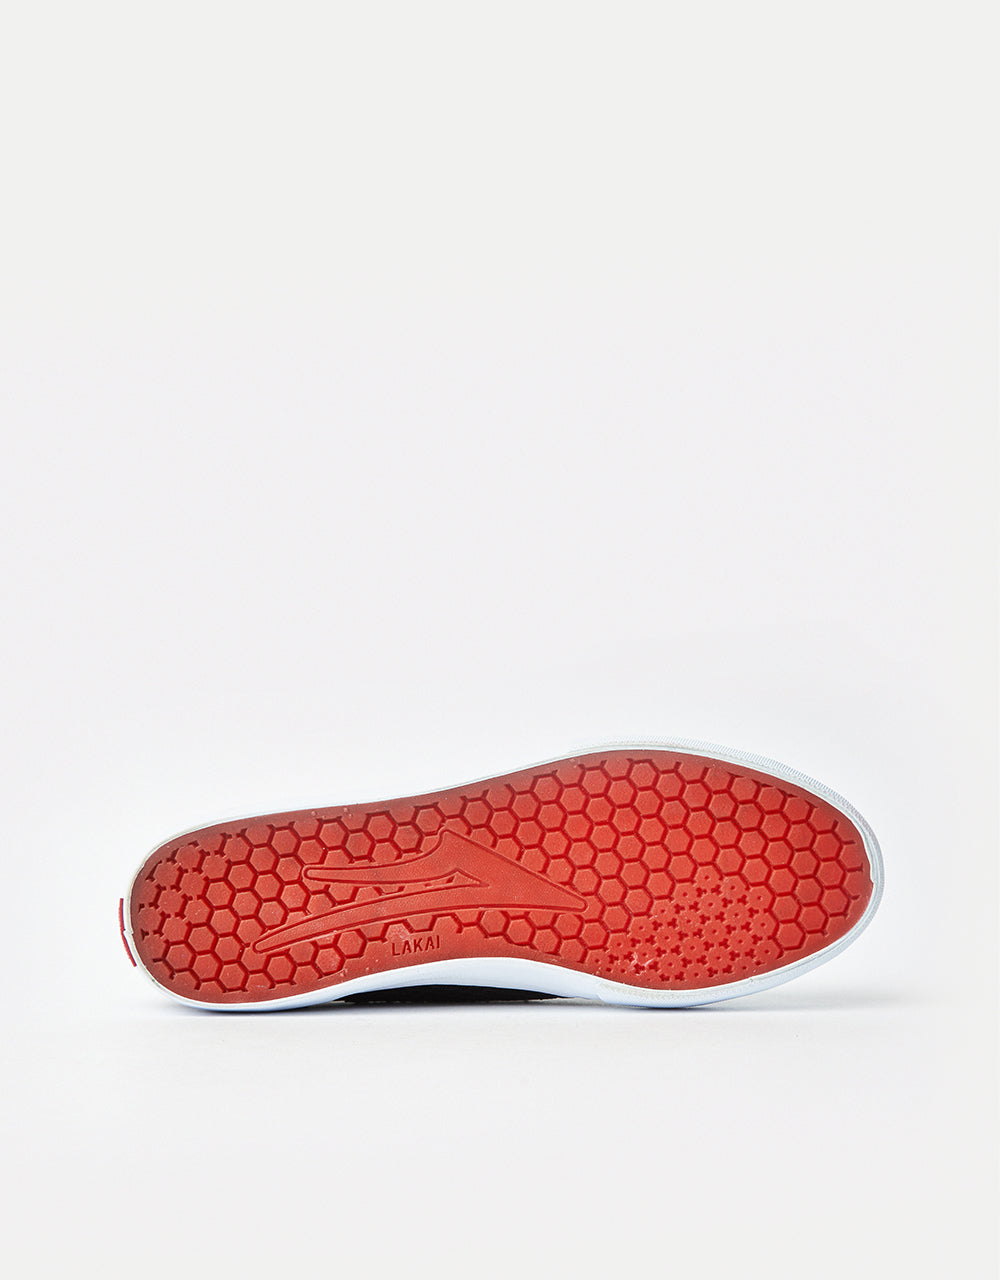 Lakai x Chocolate Flaco II Skate Shoes - Black/Red Suede